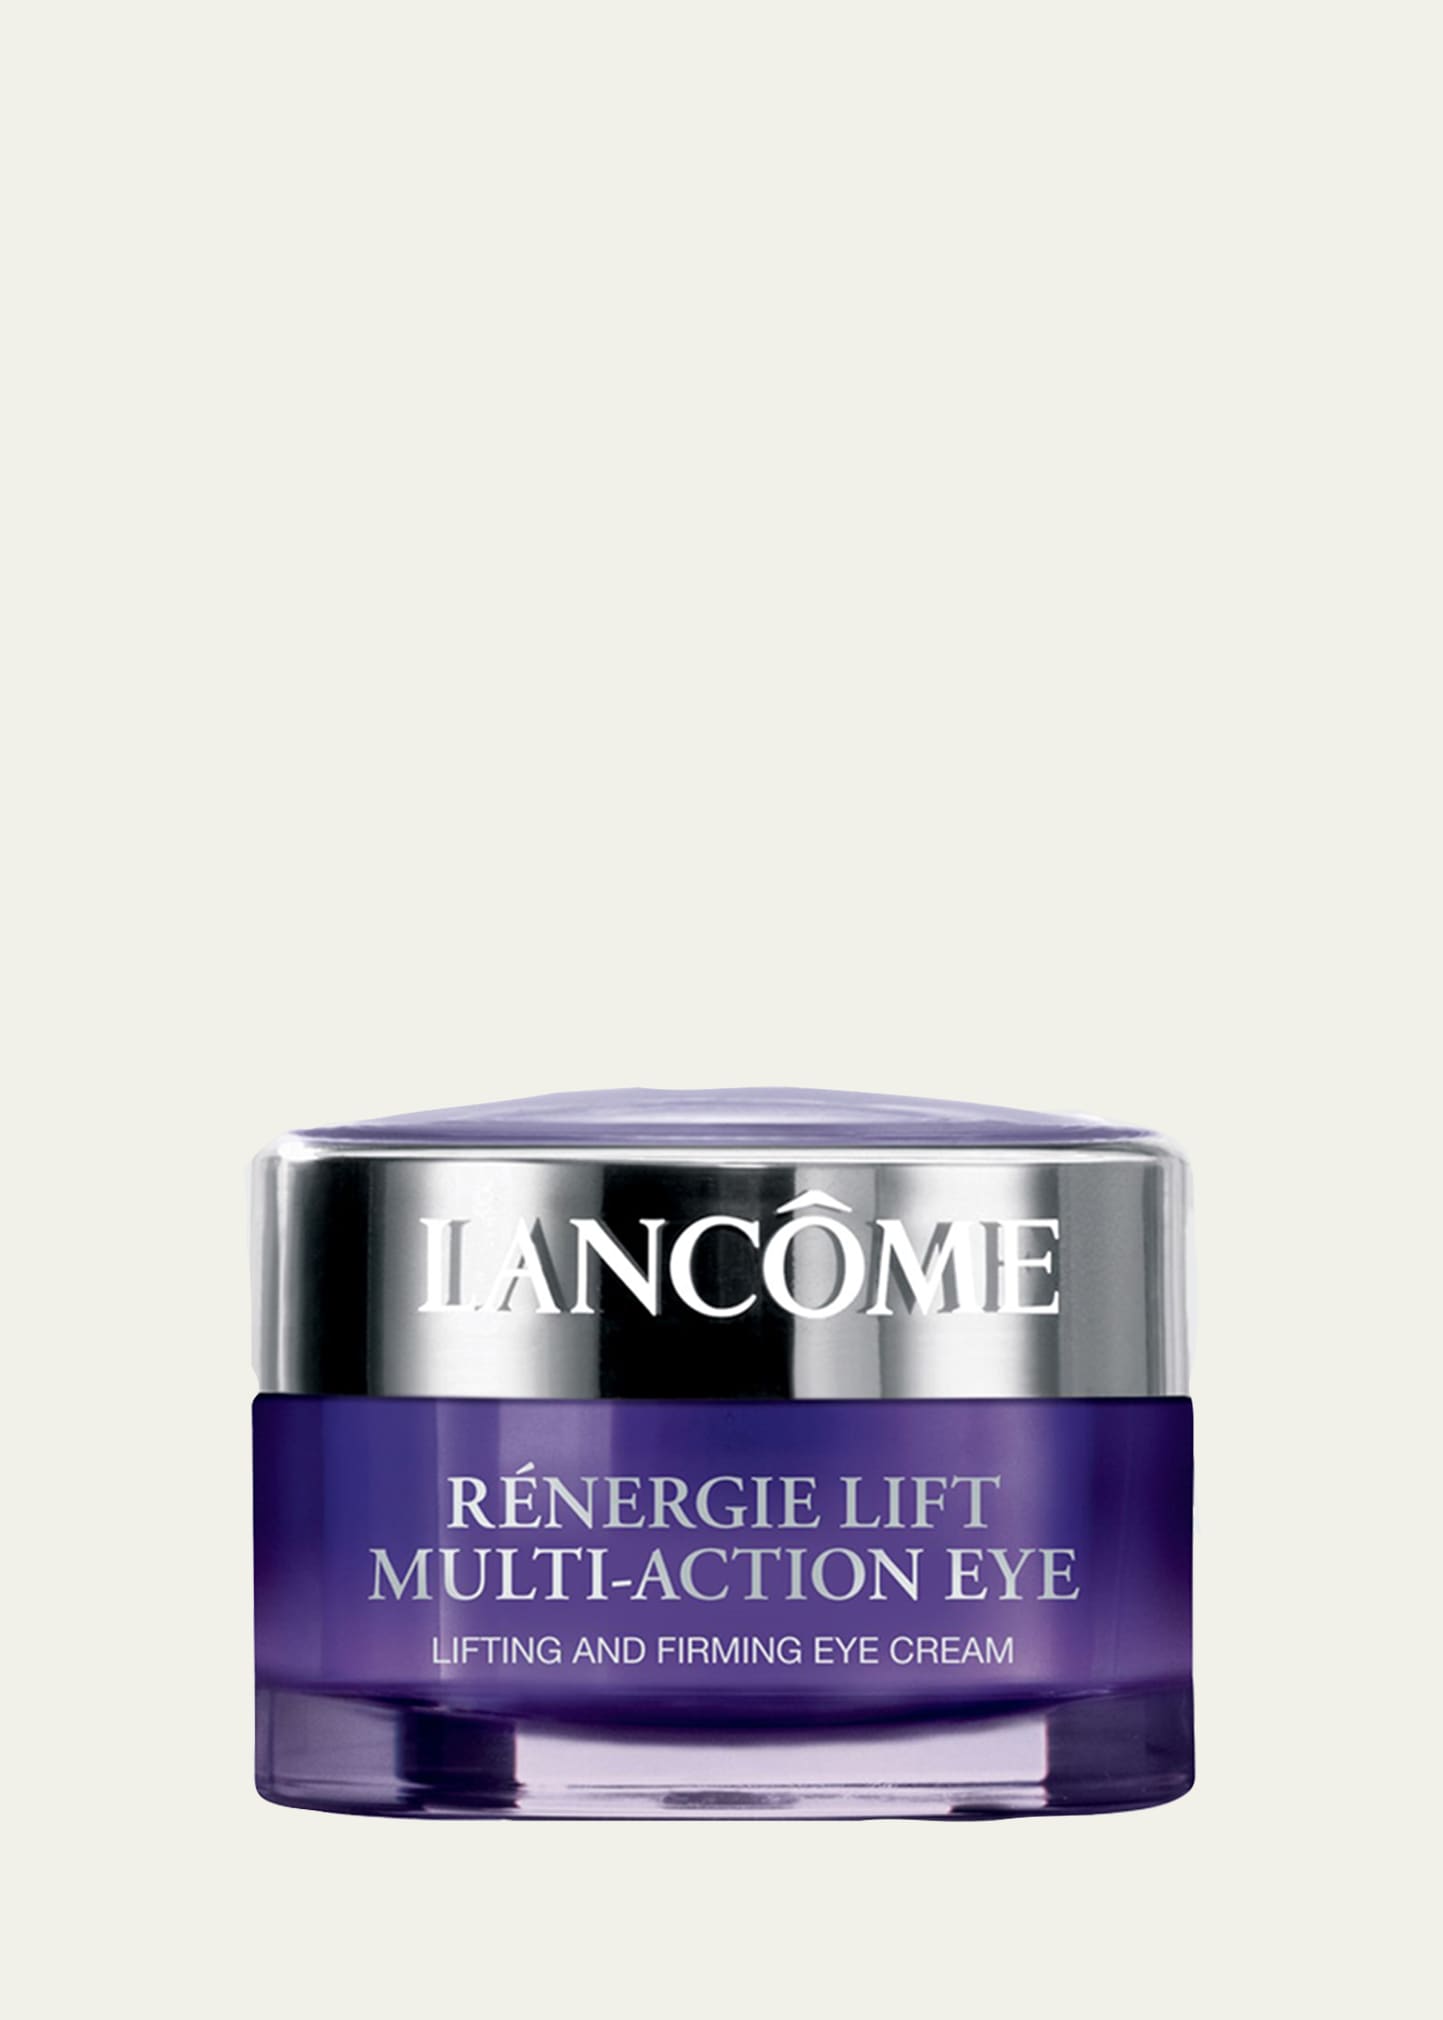 R&#233nergie Lift Multi-Action Eye Cream, 0.5 oz.